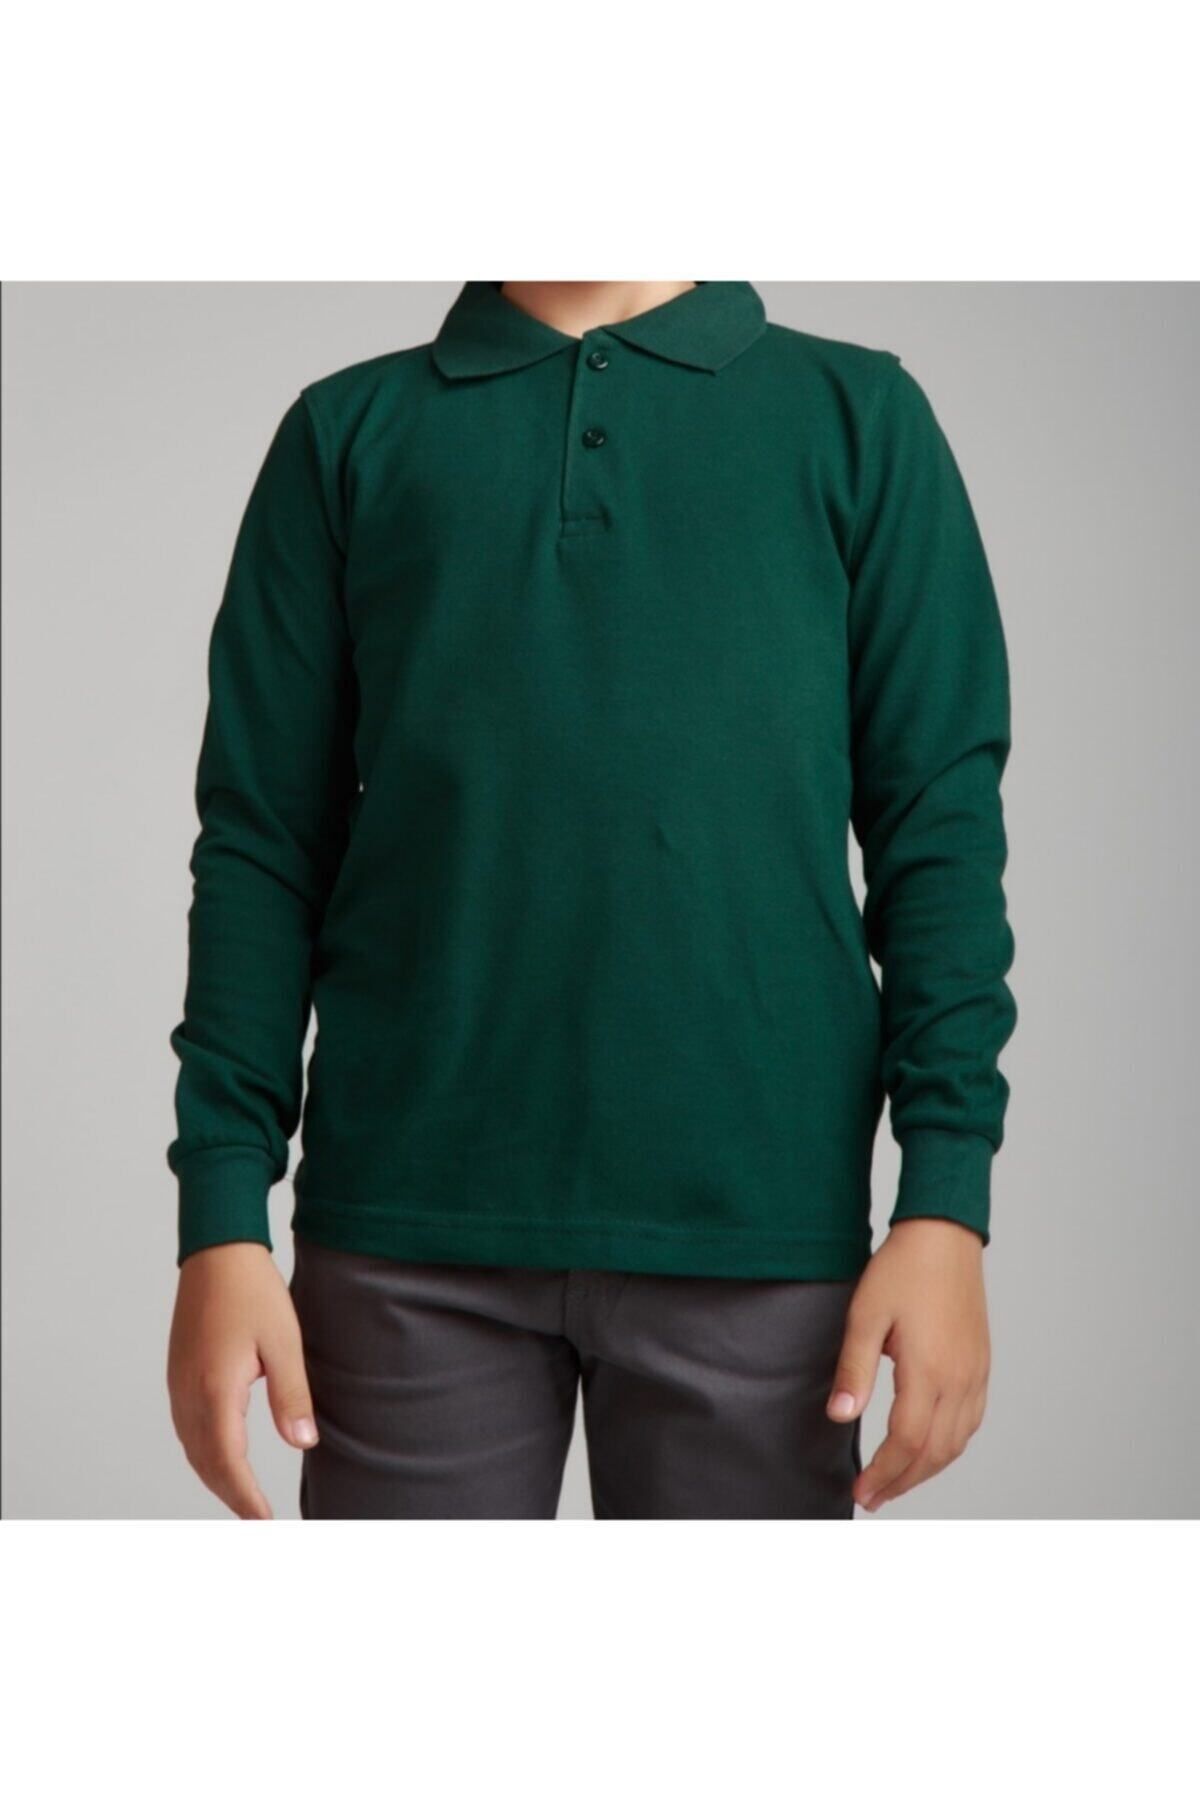 Dragora Uzun Kollu Koyu Yeşil Genç Boy Lise Okul Lakos Polo Yaka T-shirt